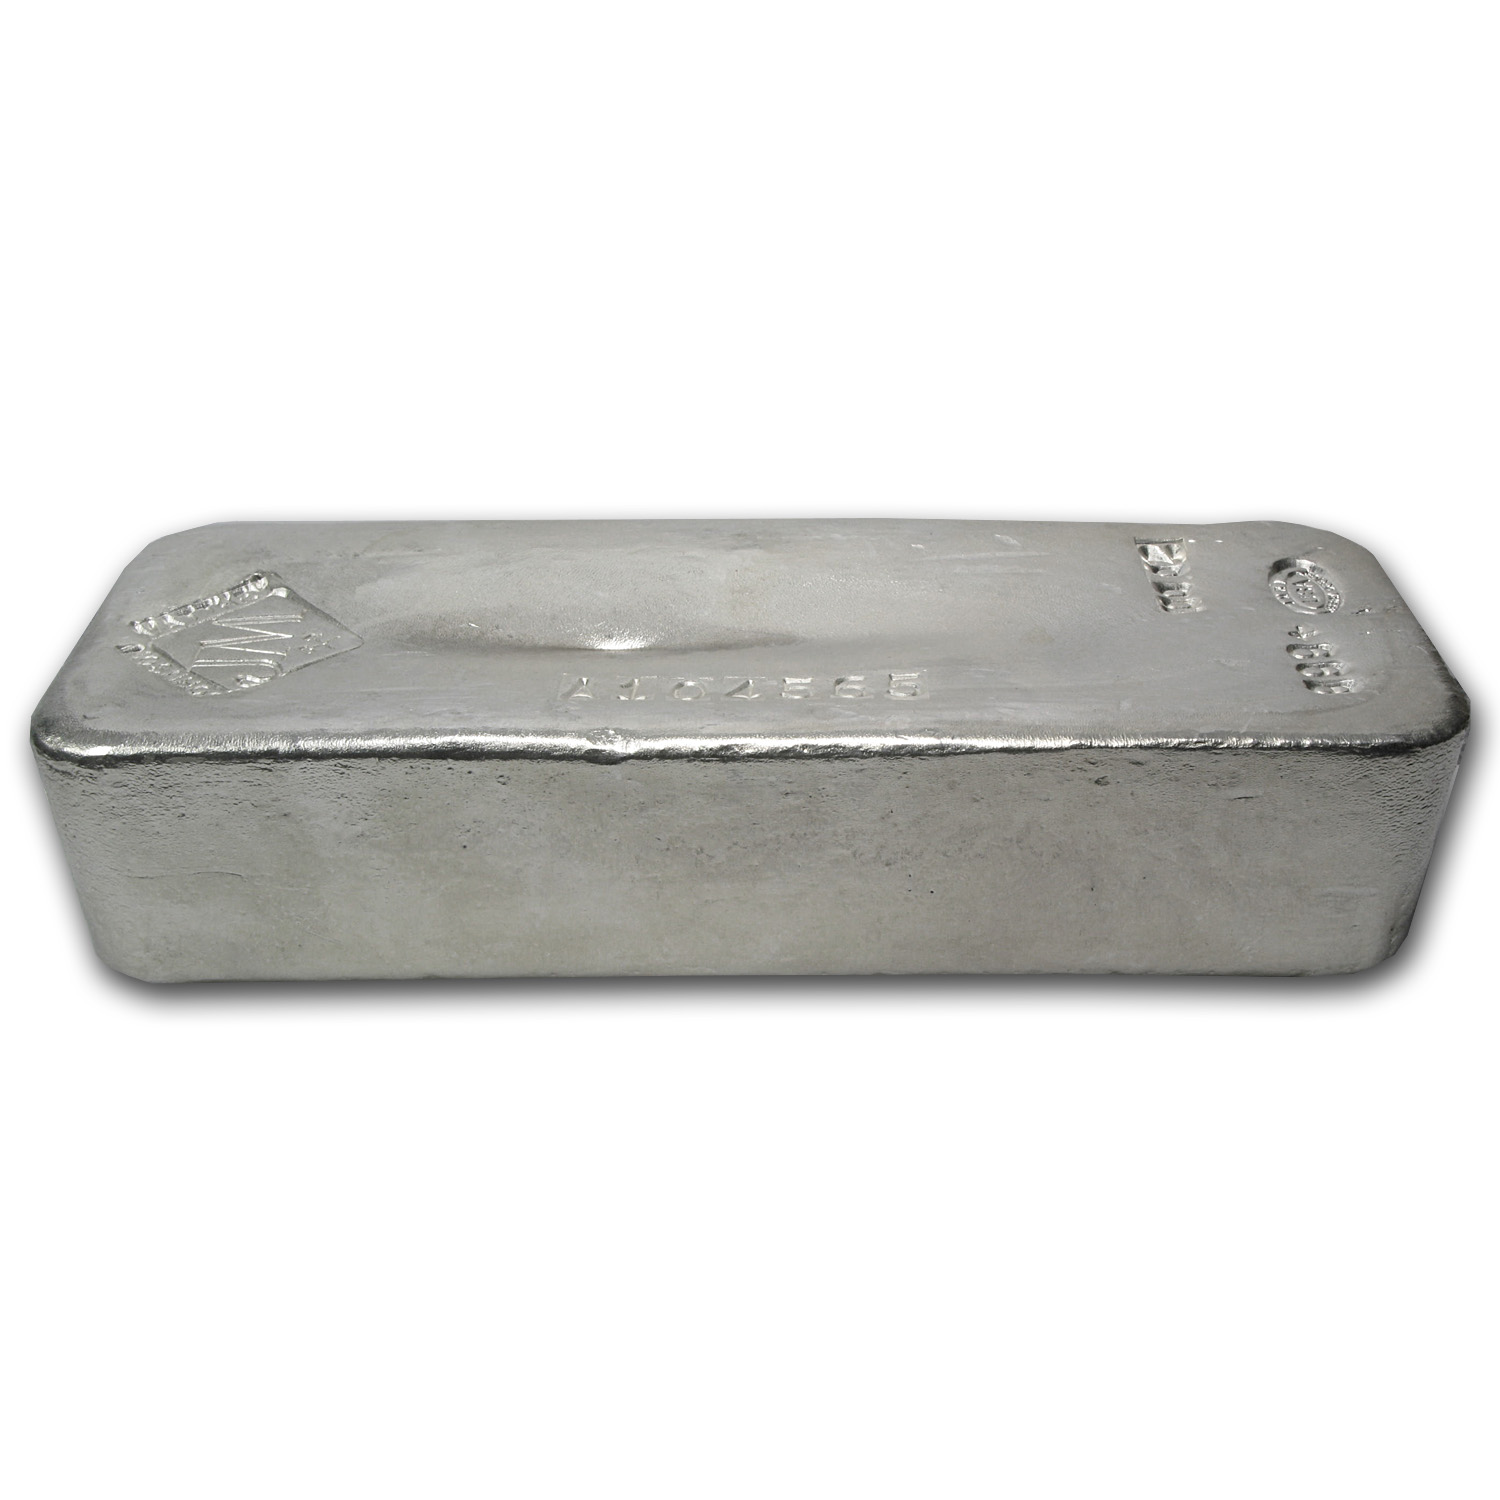 johnson matthey 100 oz silver bar serial number